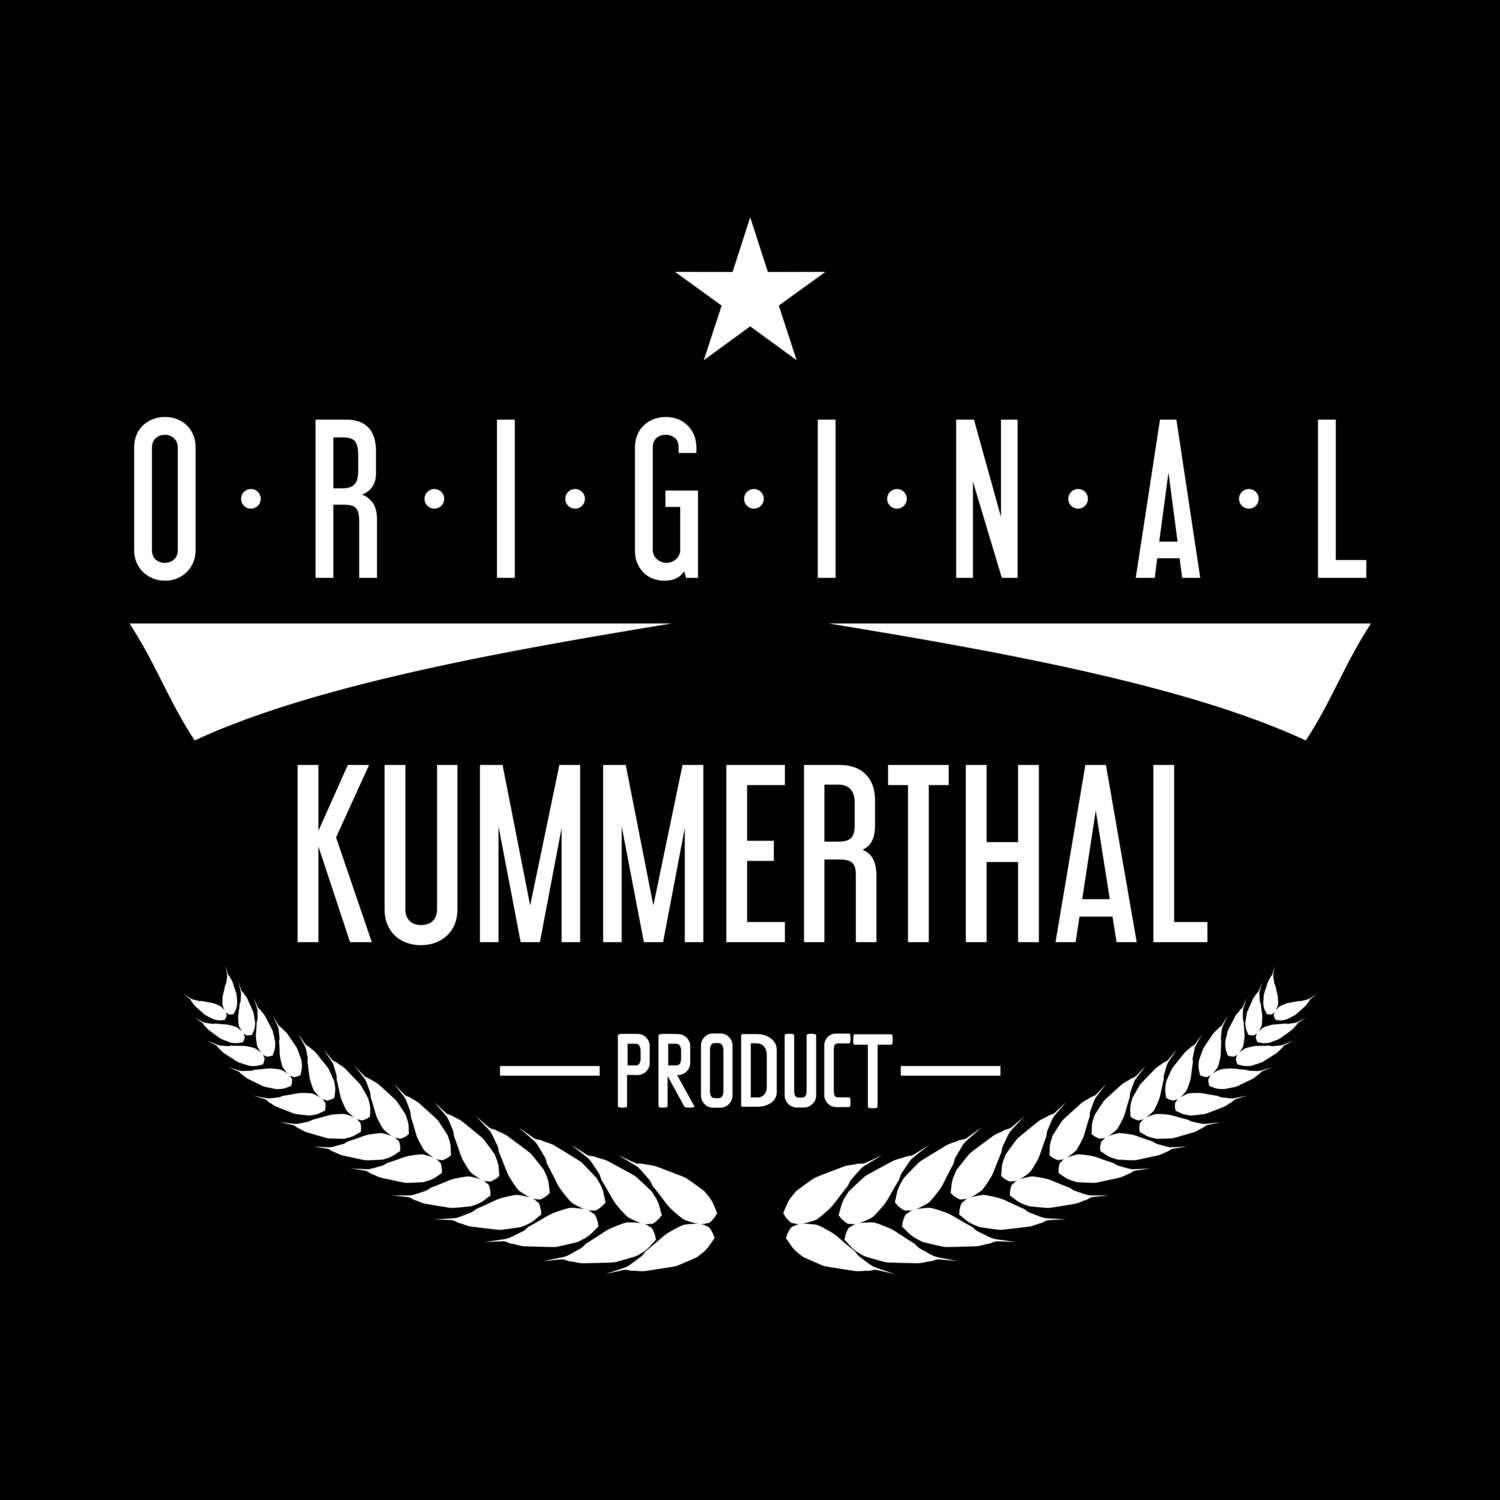 Kummerthal T-Shirt »Original Product«